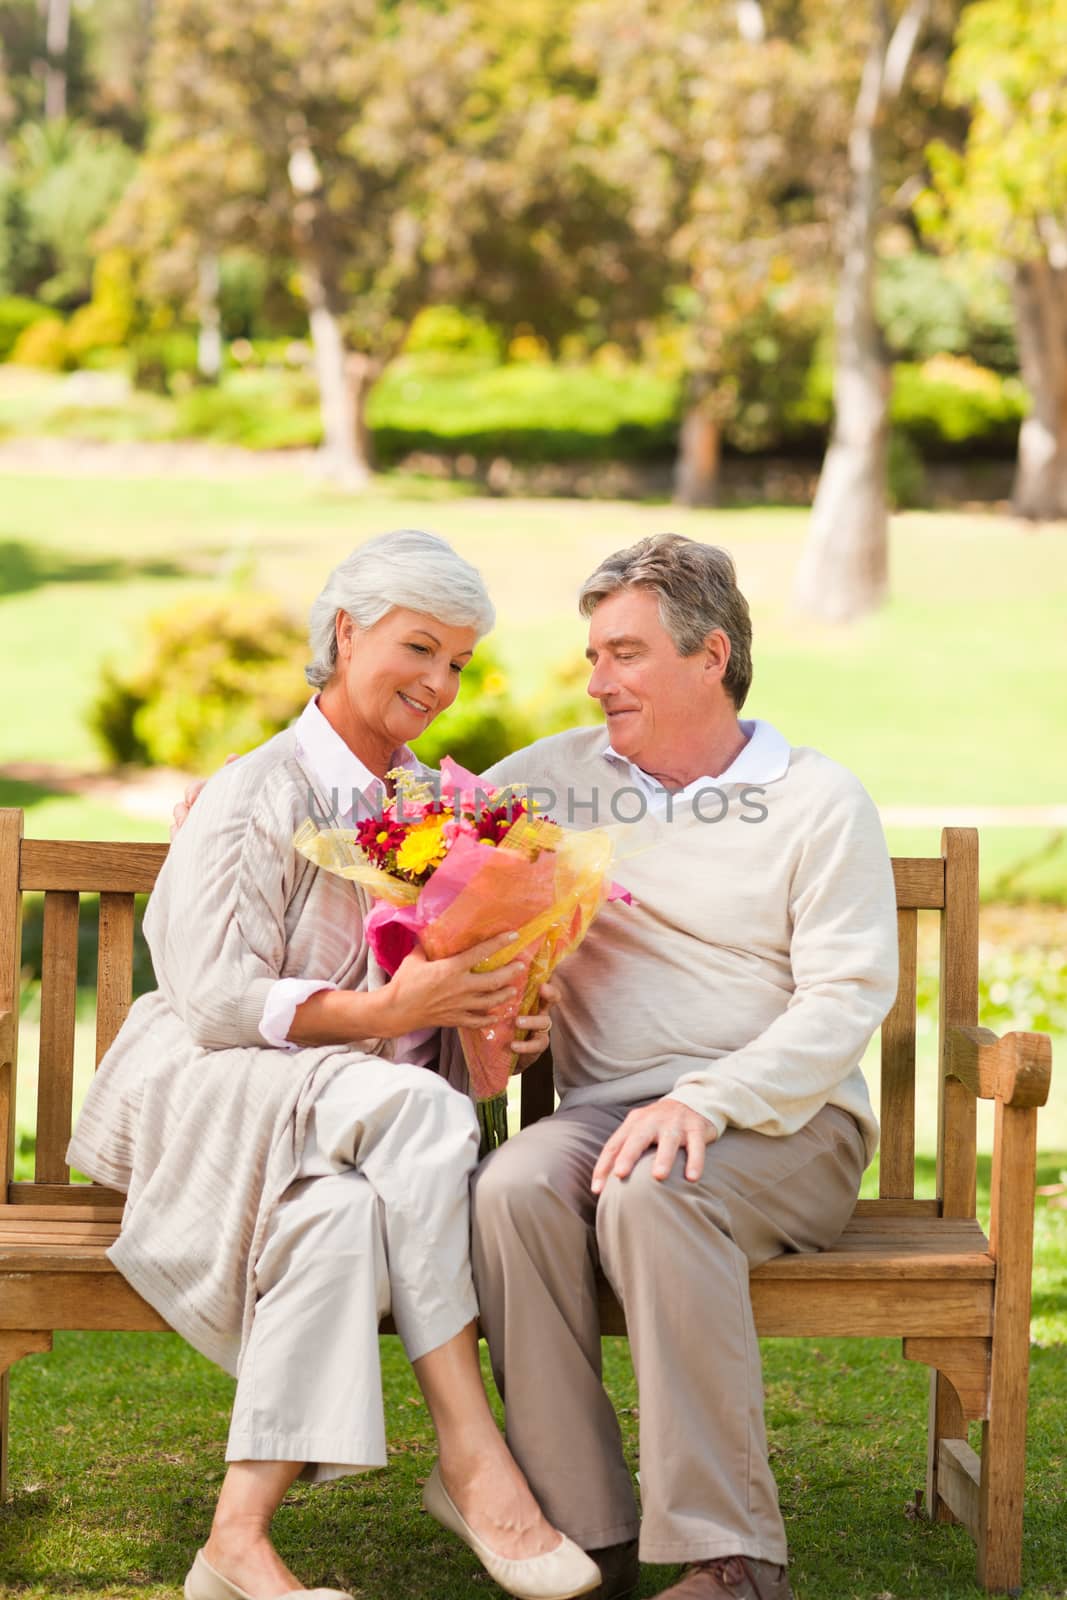 Senior man offering flowers to his wife by Wavebreakmedia